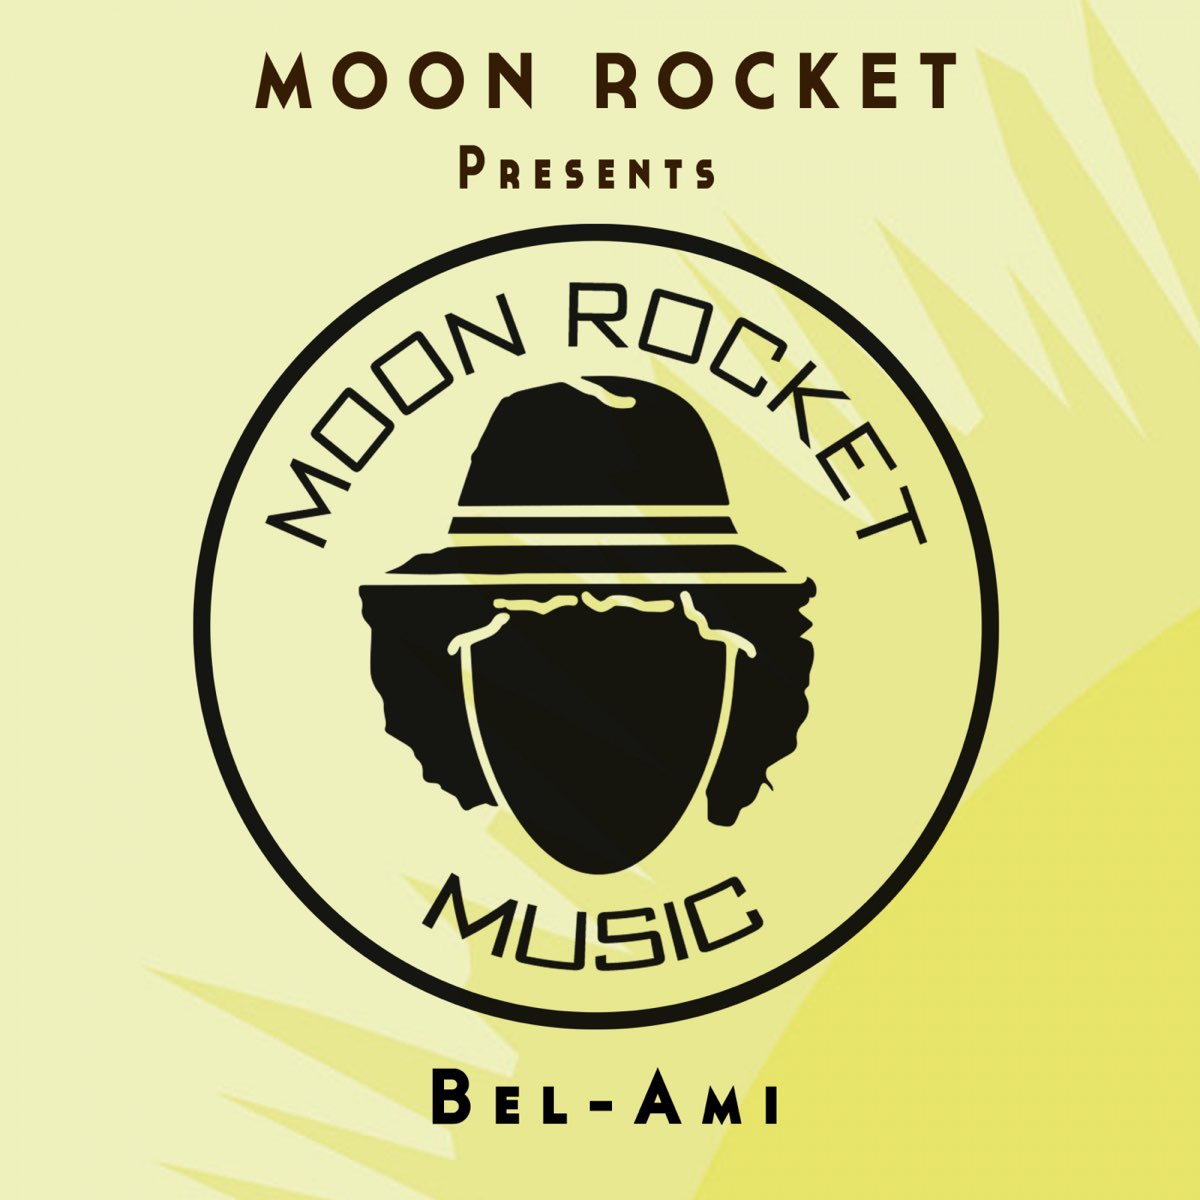 My Desire (Moon Rocket Presents) - EP by Belami on Apple Music